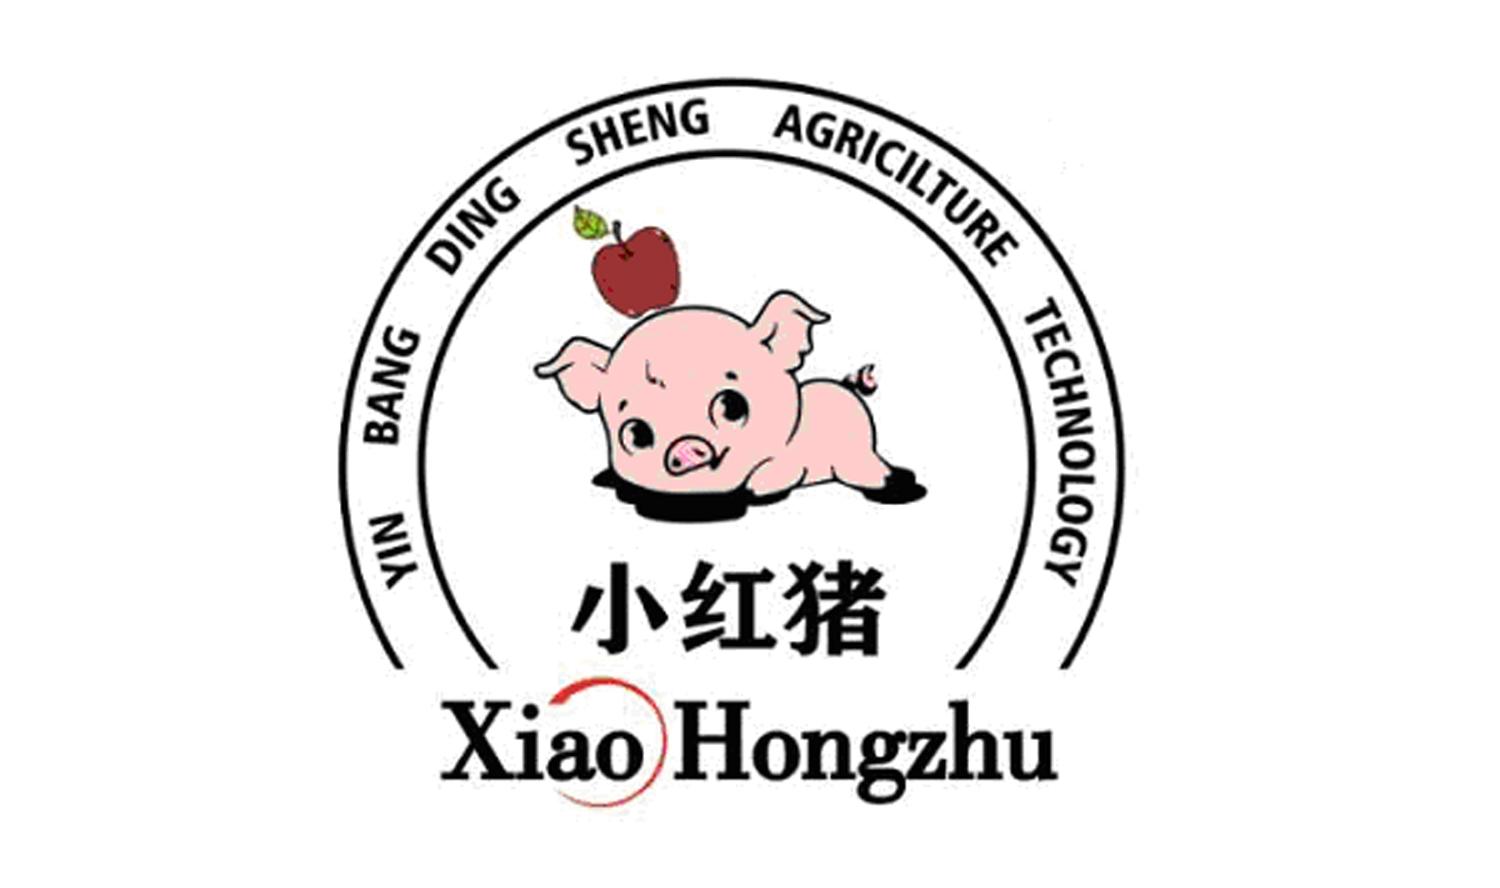 yin bang ding sheng agricilture technology 小红猪